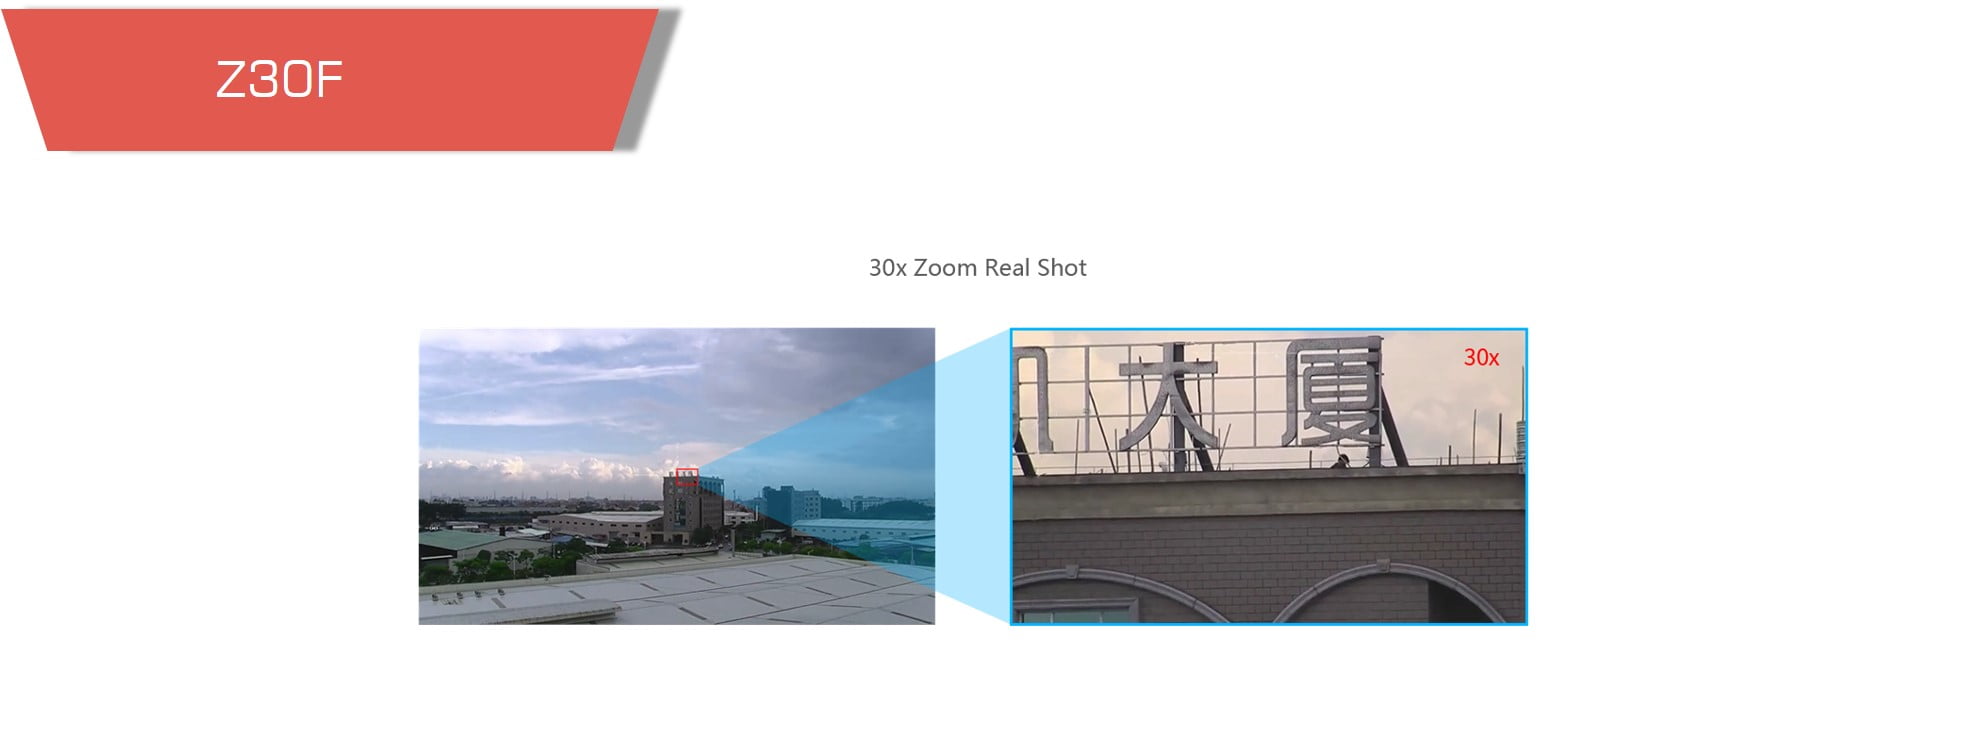 Z30f 2 - gimbal z30f,self stabilized,gimbal,payload camera,daylight camera,zoom gimbal,drone camera,ptz camera,brushless gimbal - motionew - 6